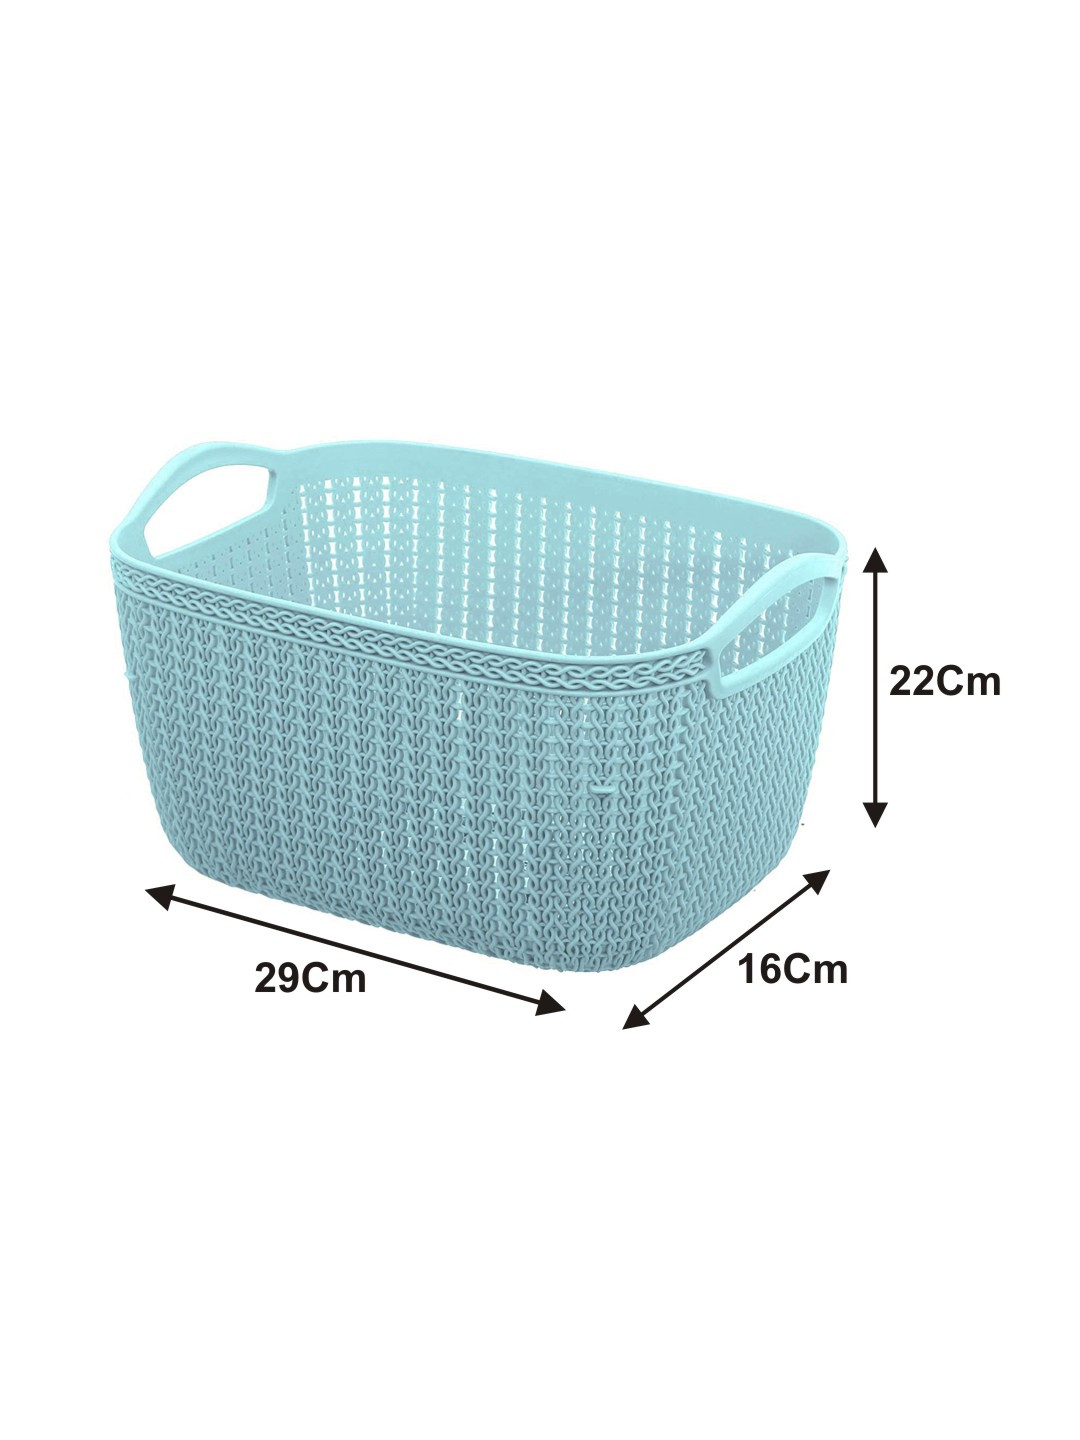 Kuber Industries Q-6 Unbreakable Plastic Multipurpose Large Size Flexible Storage Baskets/Fruit Vegetable Bathroom Stationary Home Basket with Handles (Light Blue)